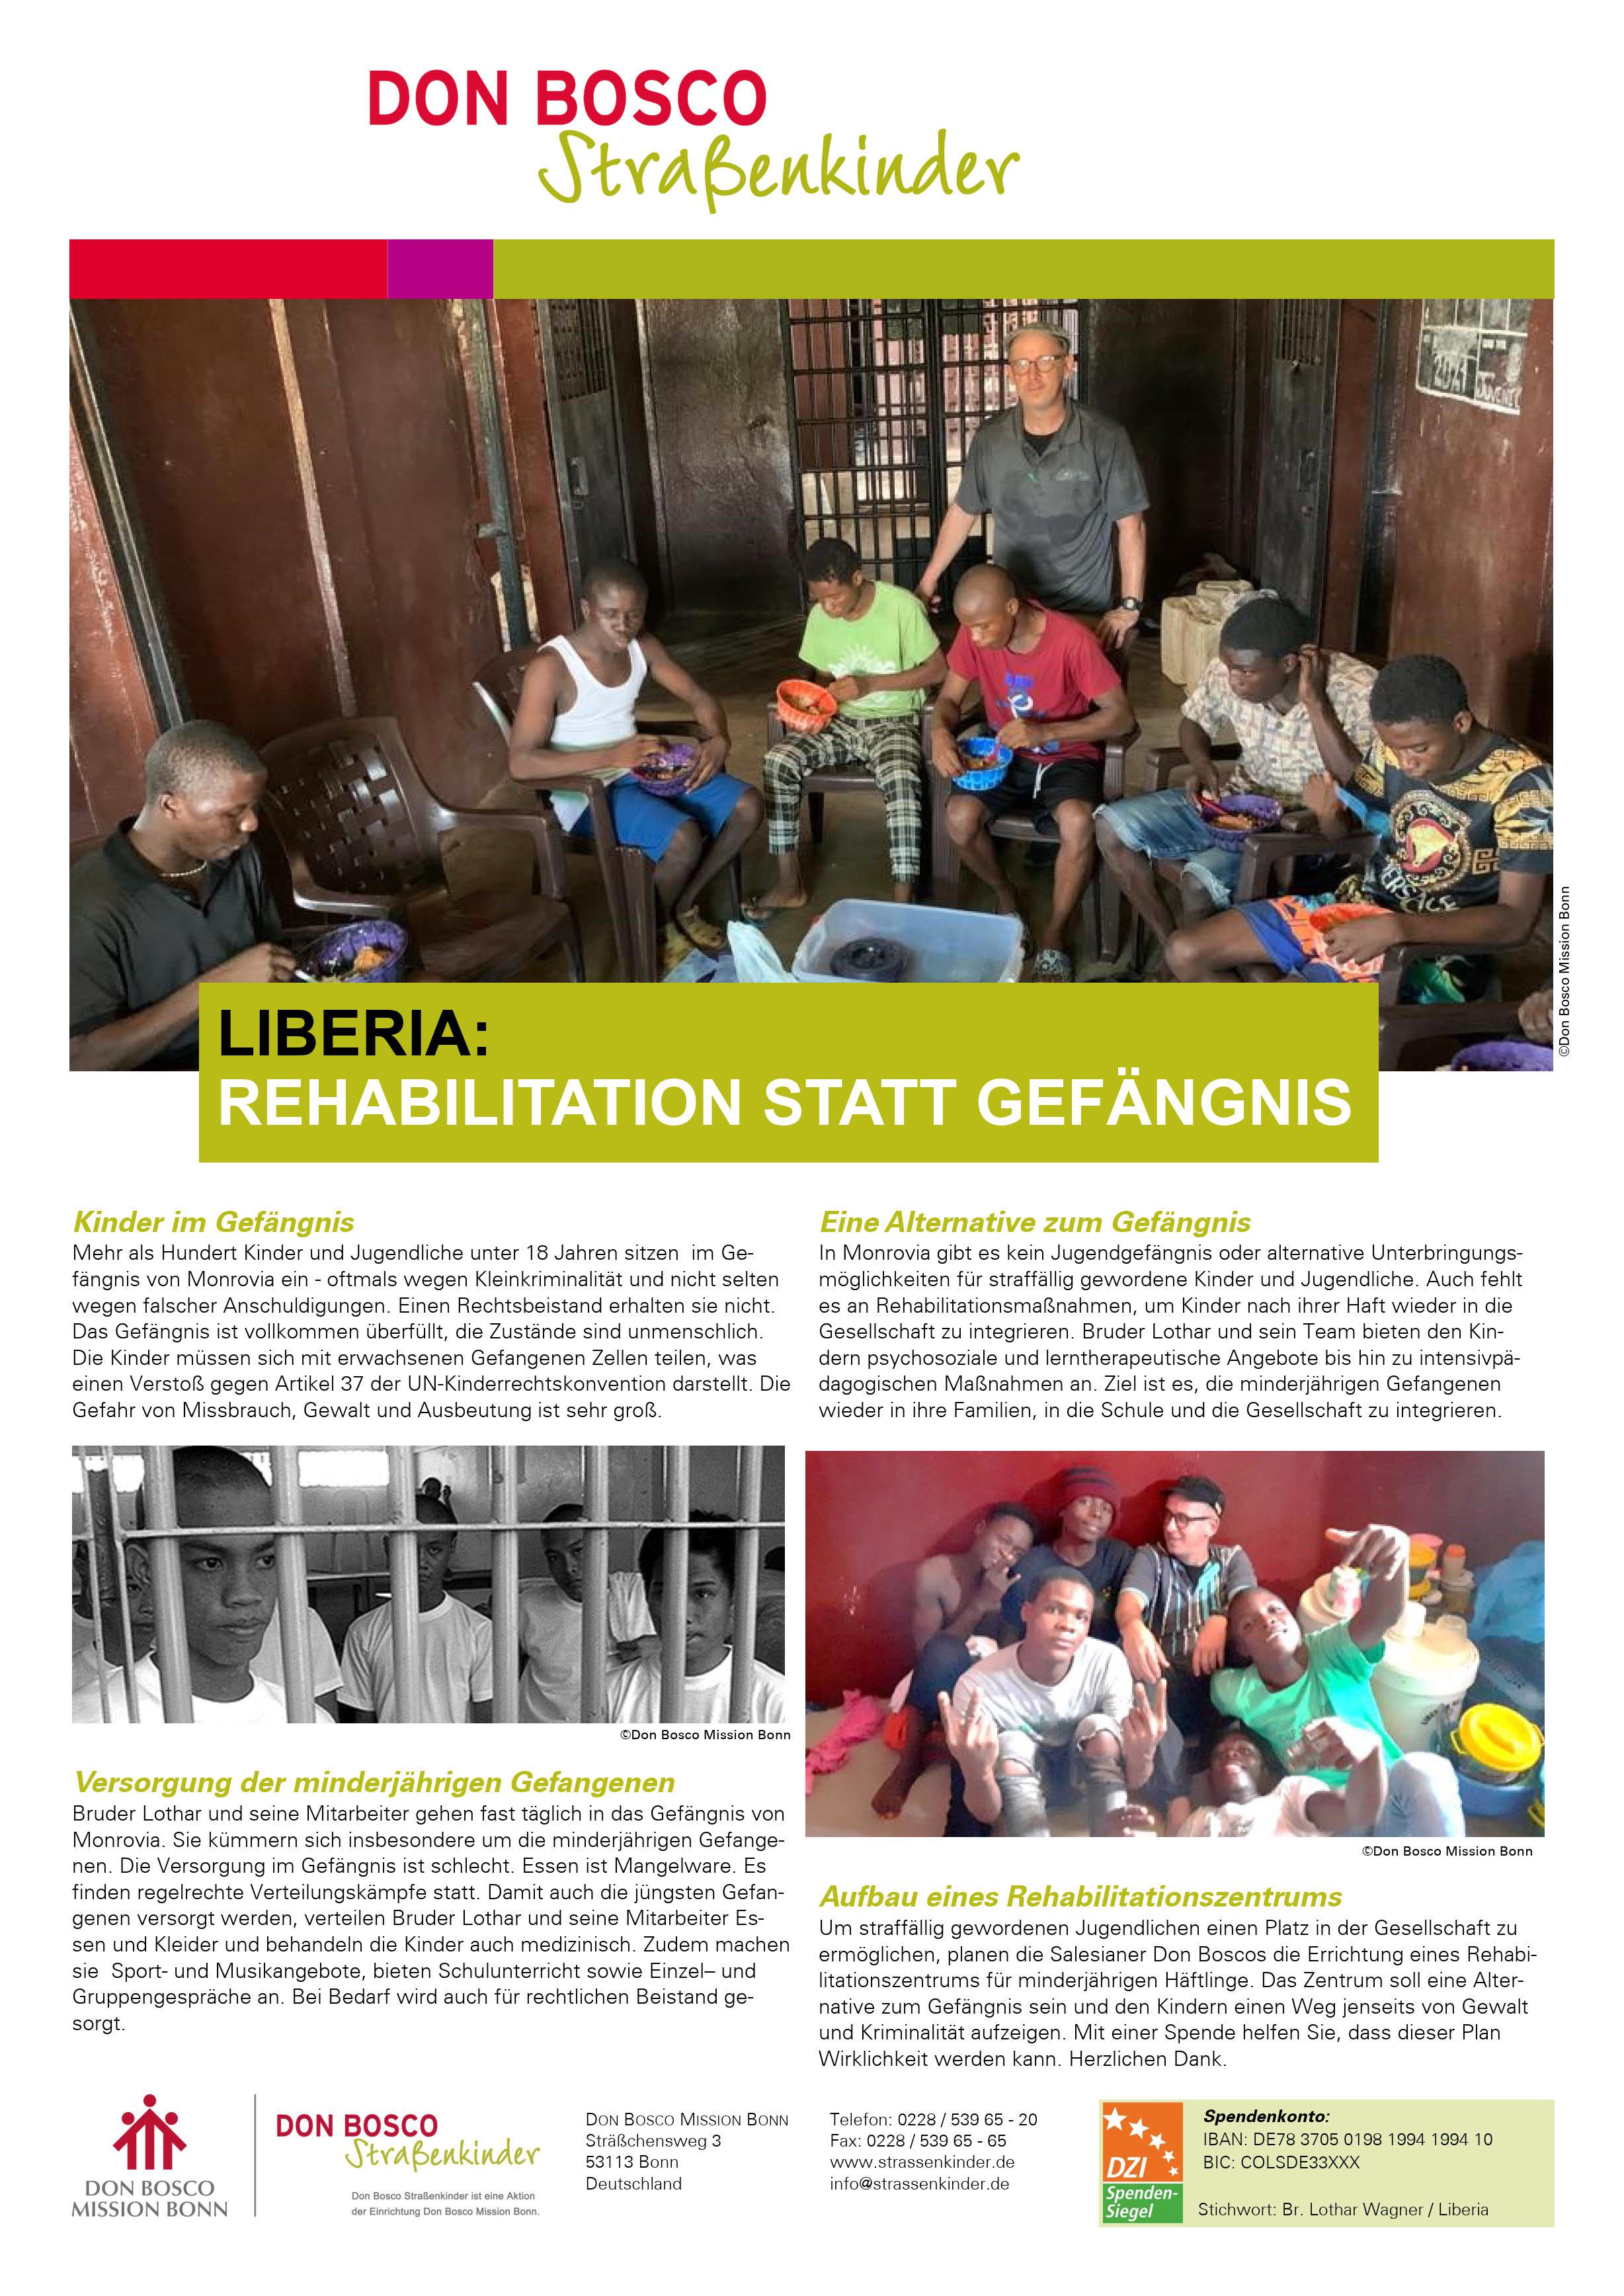 Don Bosco Projektinformationen Gefängniskinder Liberia 1 Seite 1